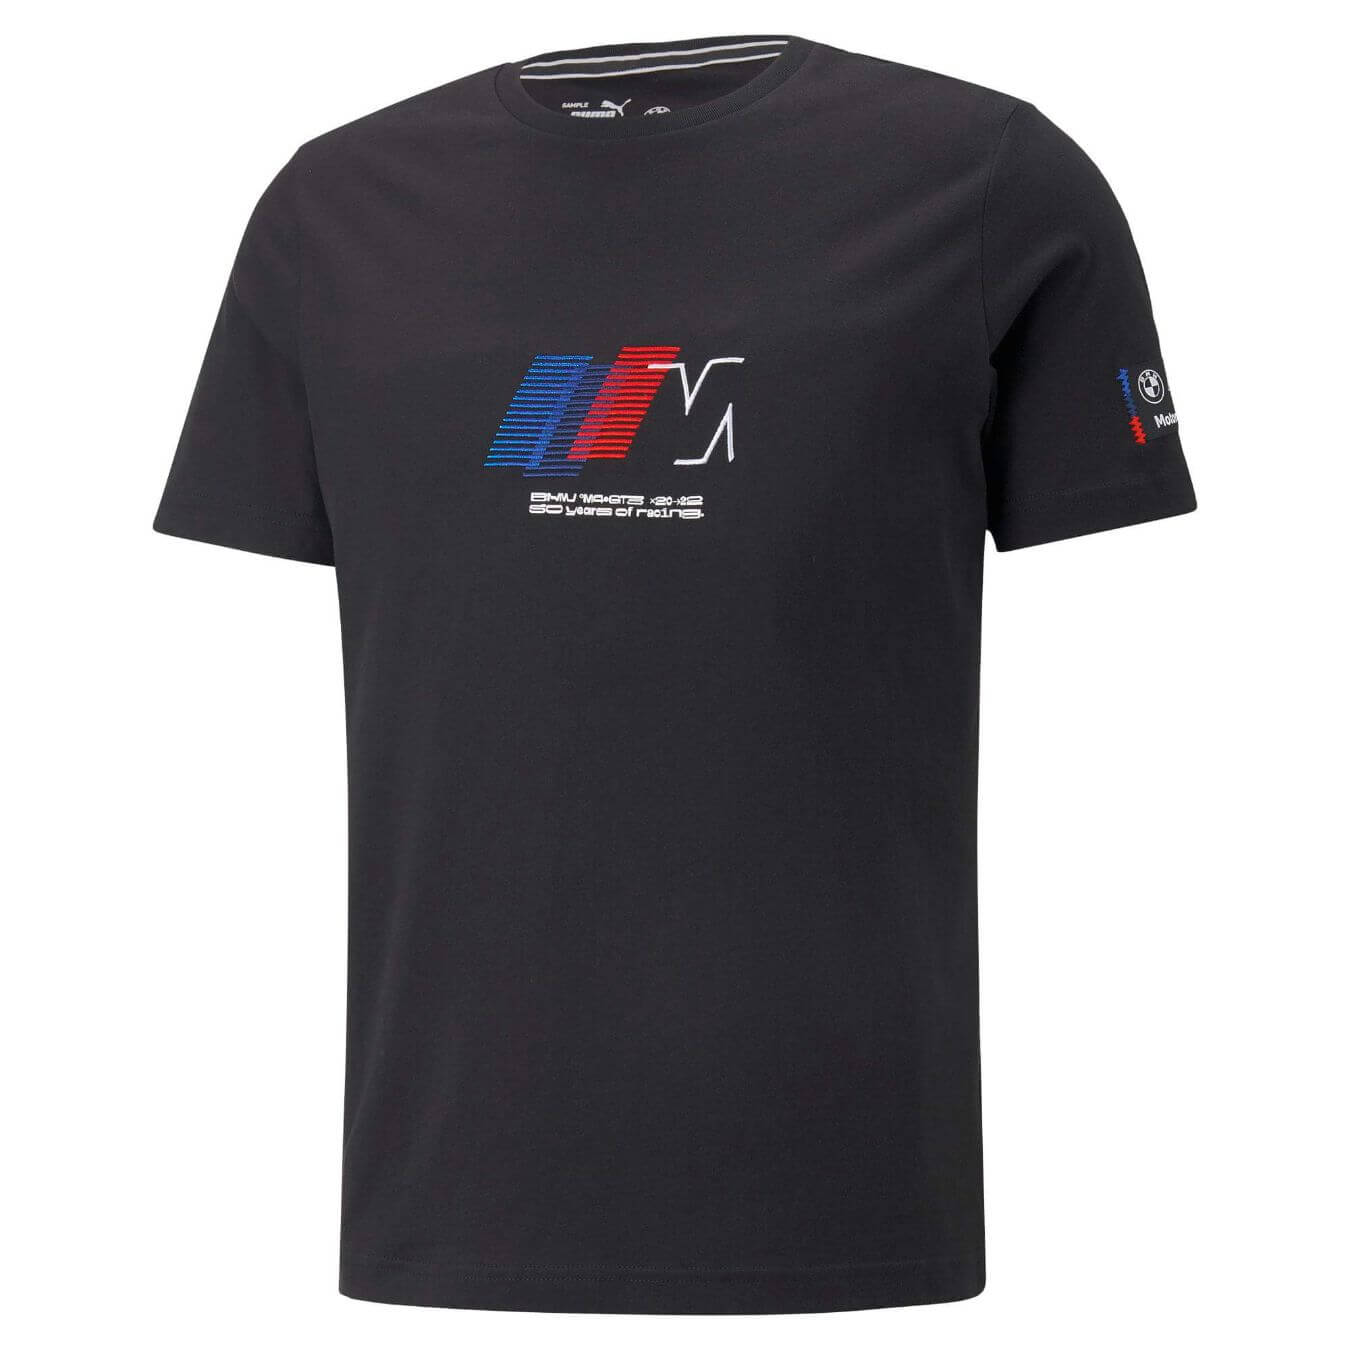 Logo FIA BMW MOTORSPORT MMS STATEMENT Men's T-Shirt  - Black